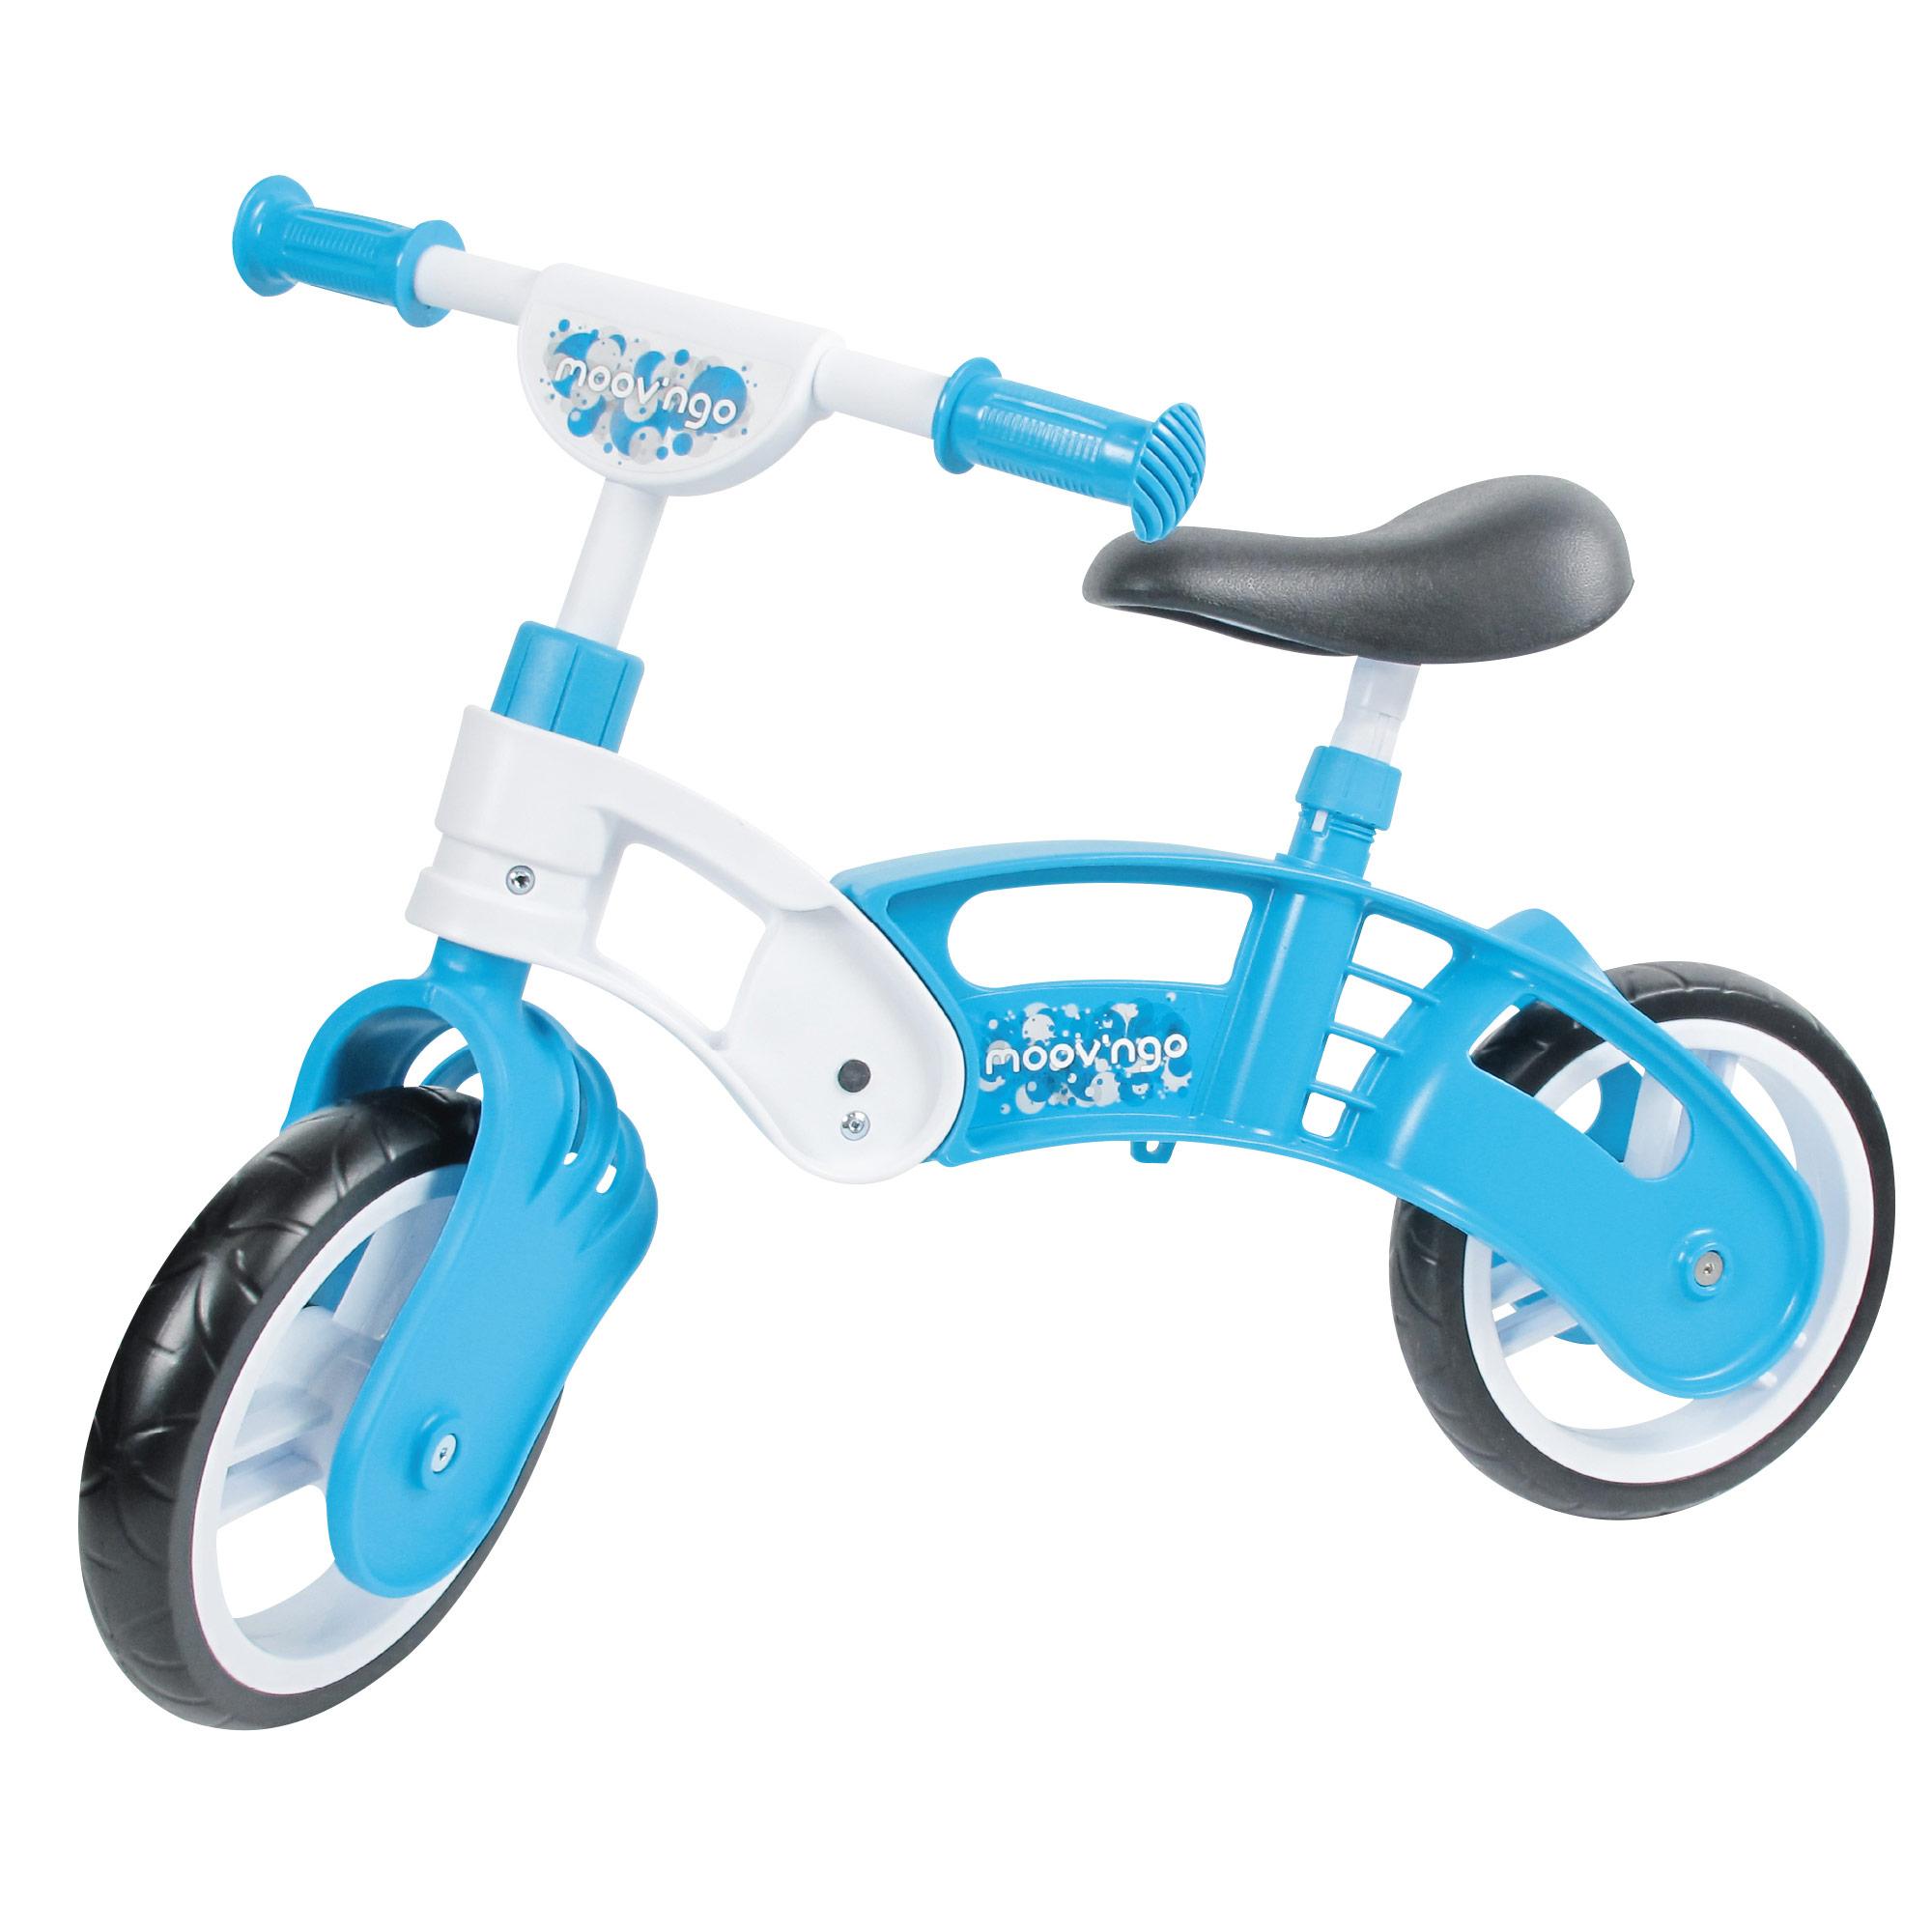 Велосипед беговел отзывы. Balance Bike Plus беговел kyooty. Детский беговел БМВ. Беговел для детей бирюза. Вертолёт беговел для детей 6 - 7 лет.